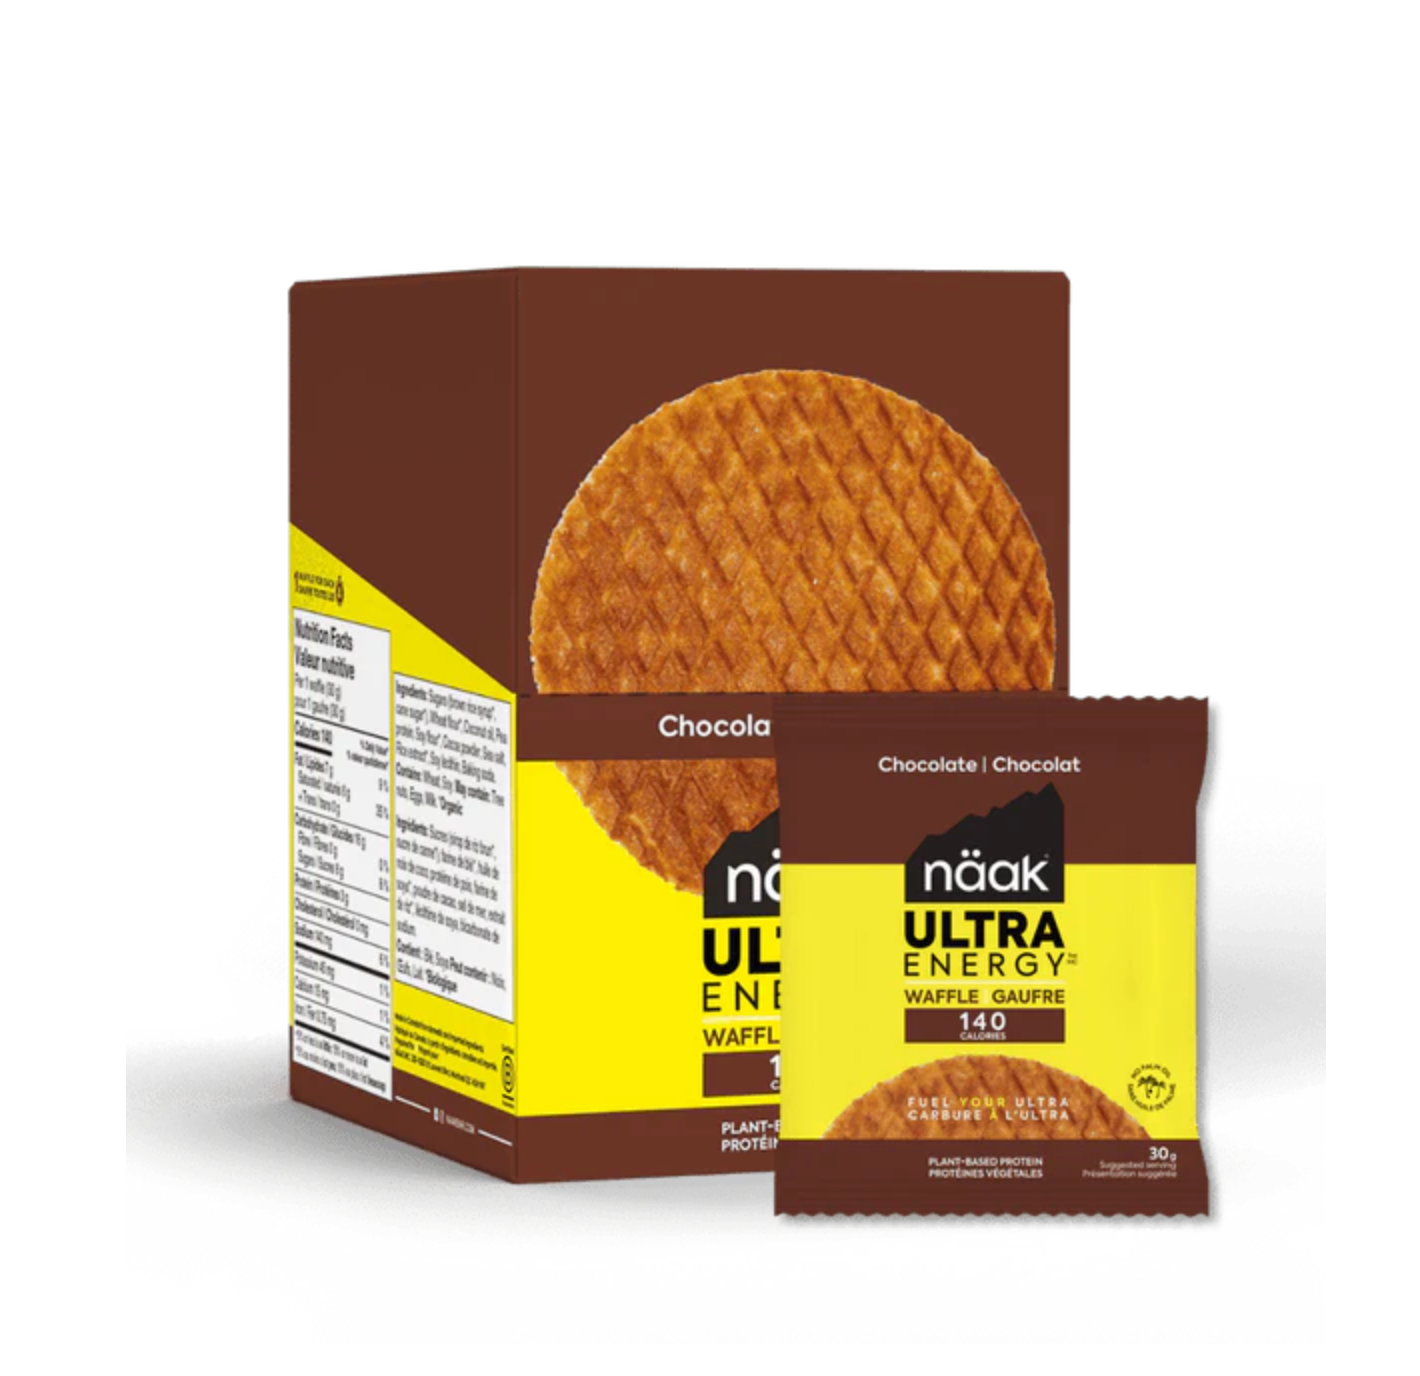 Naak Ultra Energy Waffles - Box of 12